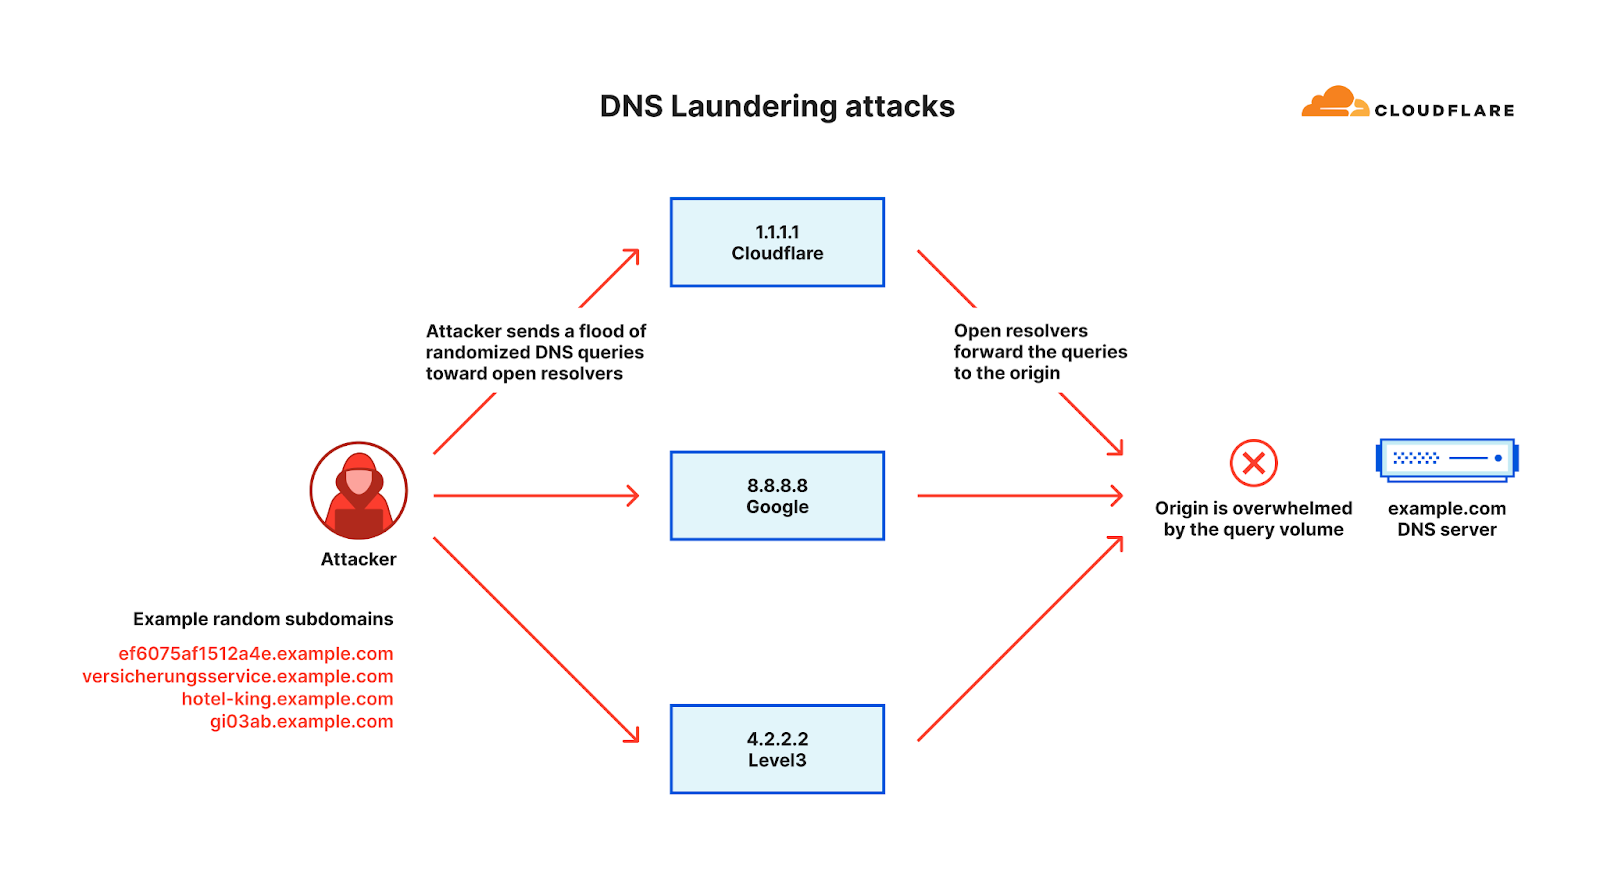 Illustration of a DNS Laundering DDoS attack